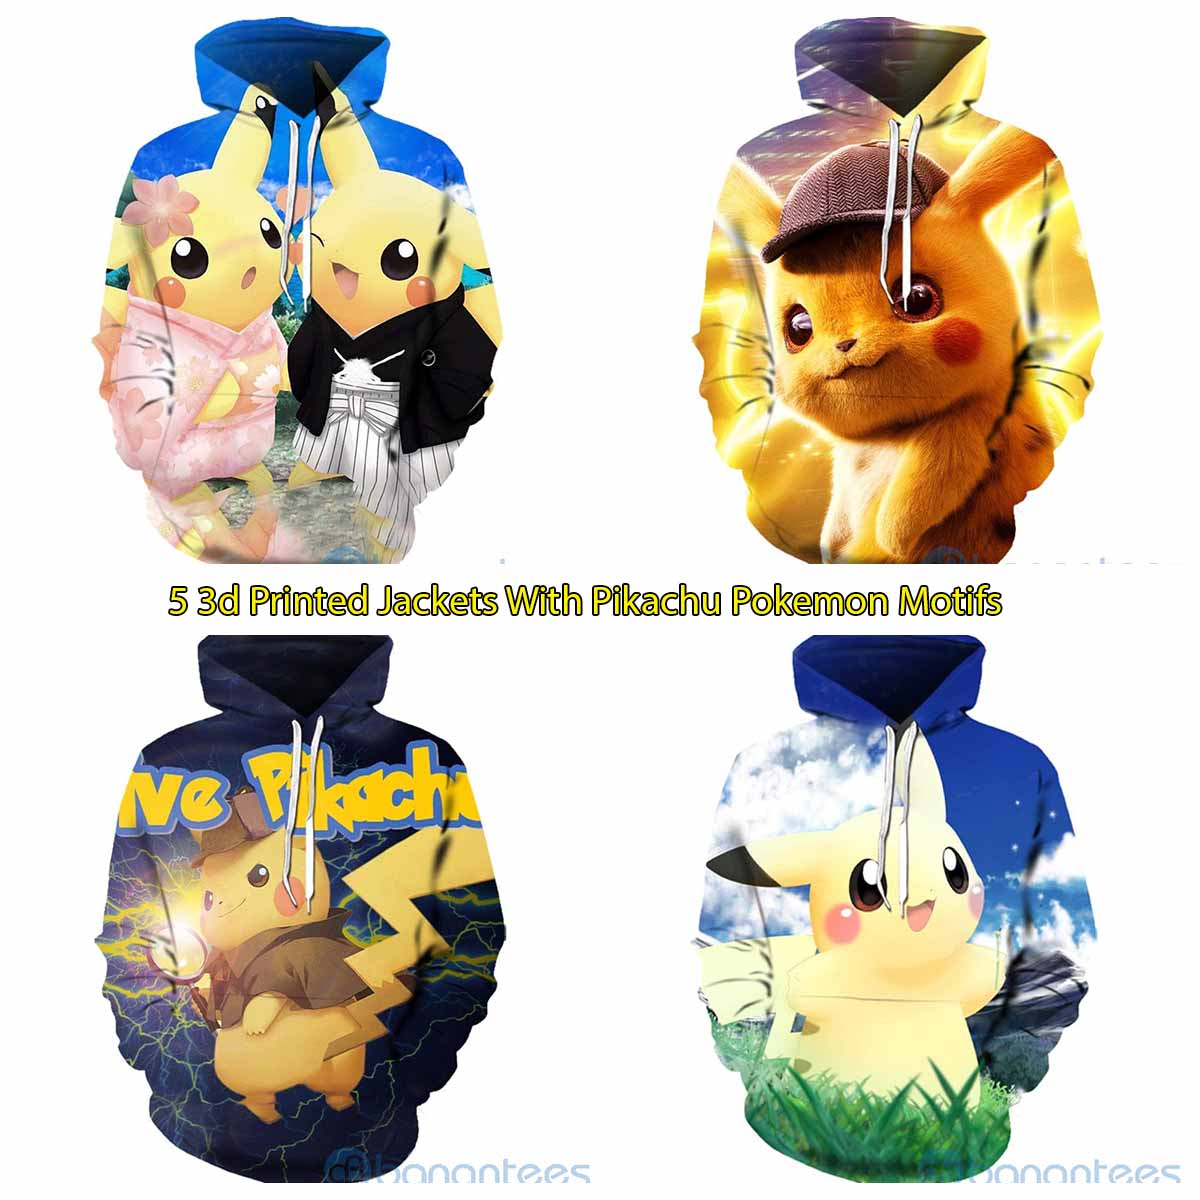 5 3d Printed Jackets With Pikachu Pokemon Motifs